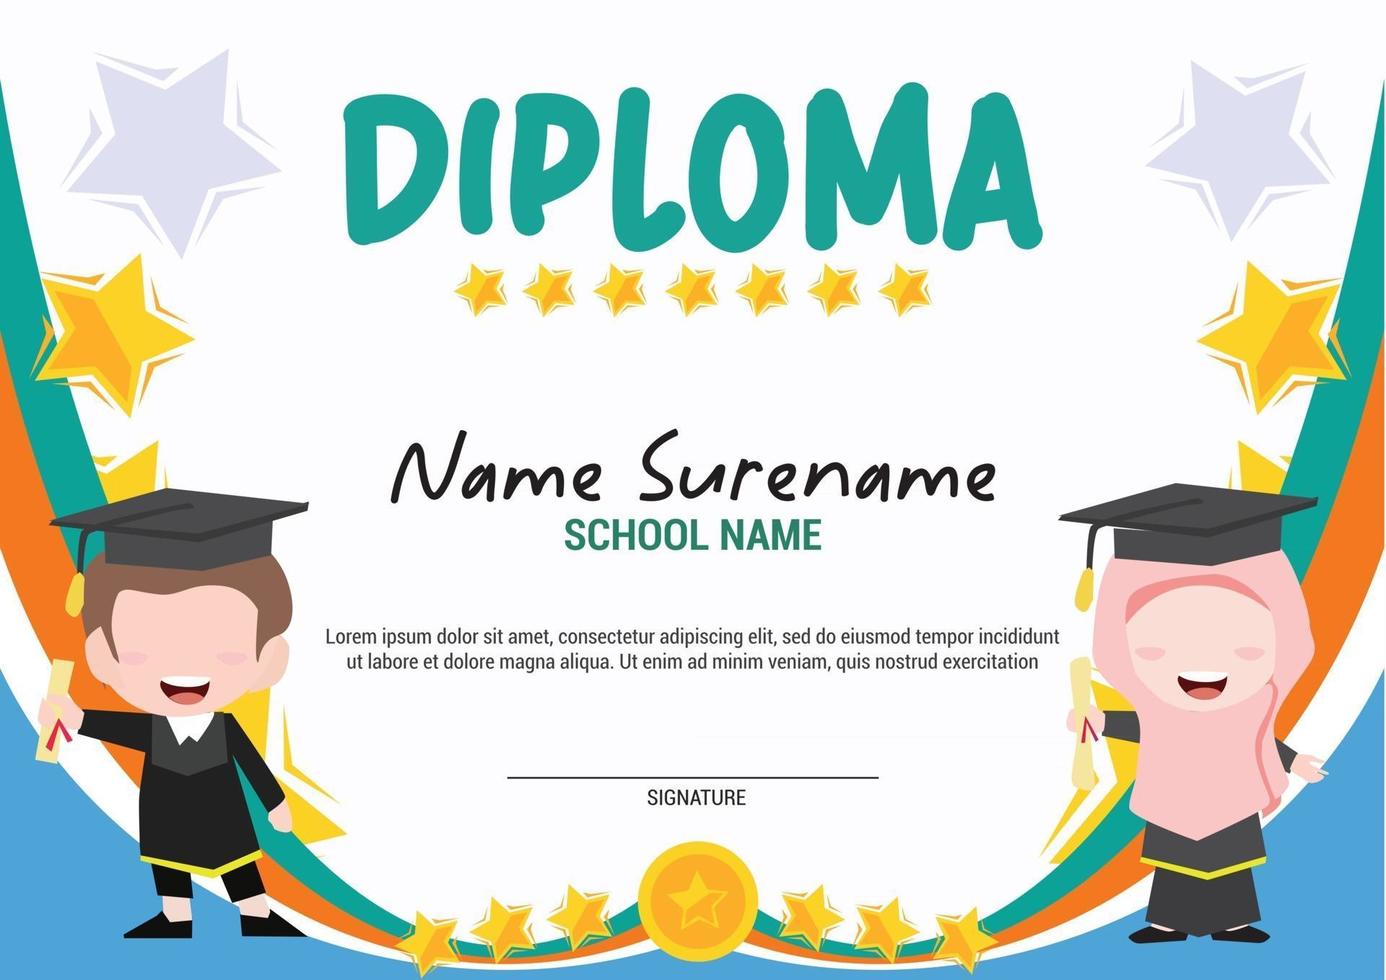 Diploma Certificate For Preschool And Elementary School Kids muslim multipurpose vector